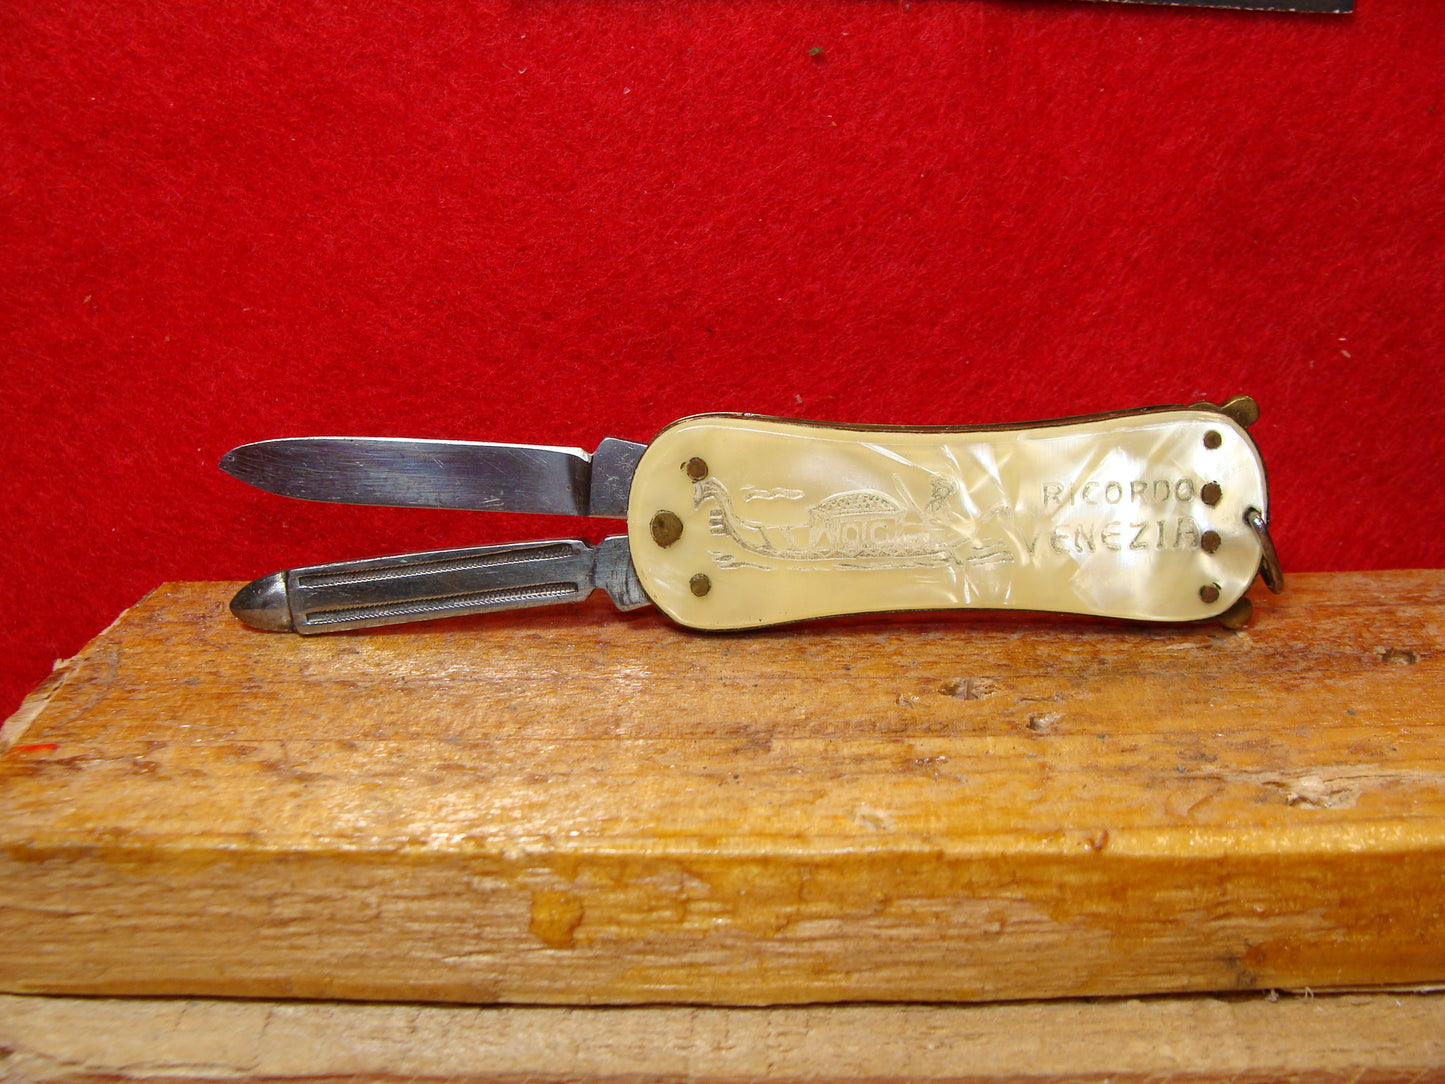 BREVETT 34749 ITALY 1950-58 PULL TAB ITALIAN AUTOMATIC KNIFE DOUBLE BLADE CRACKED ICE CELLULOID HANDLES, ETCHED: RICORDO VENEZIA